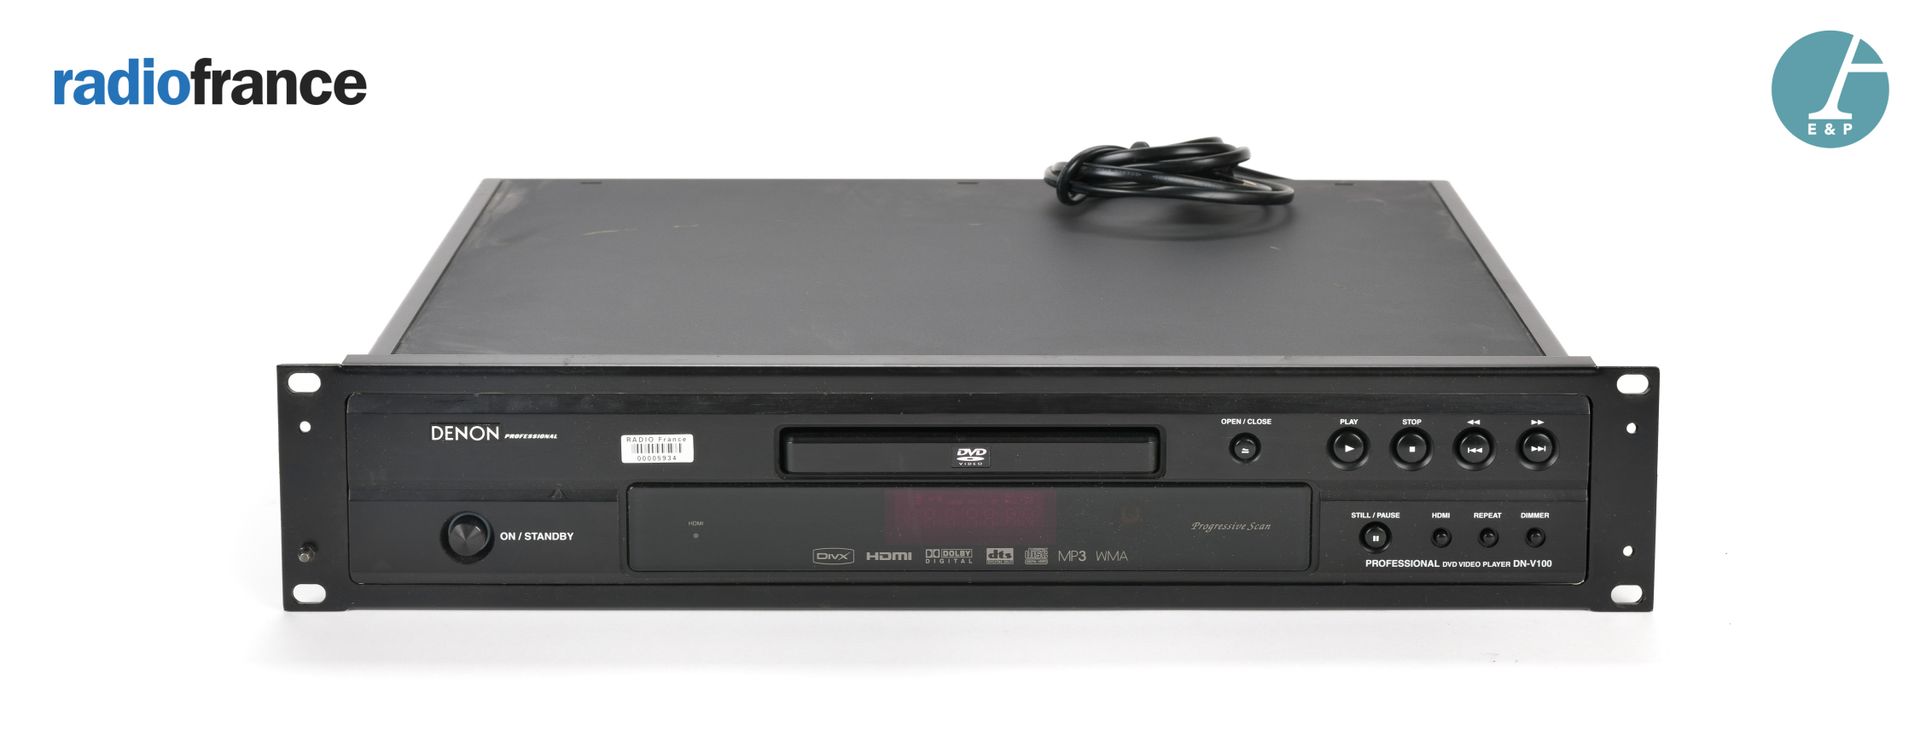 Null DENON professional - DVD video player DN-V100

H: 9cm - W: 48cm - D: 31cm

&hellip;